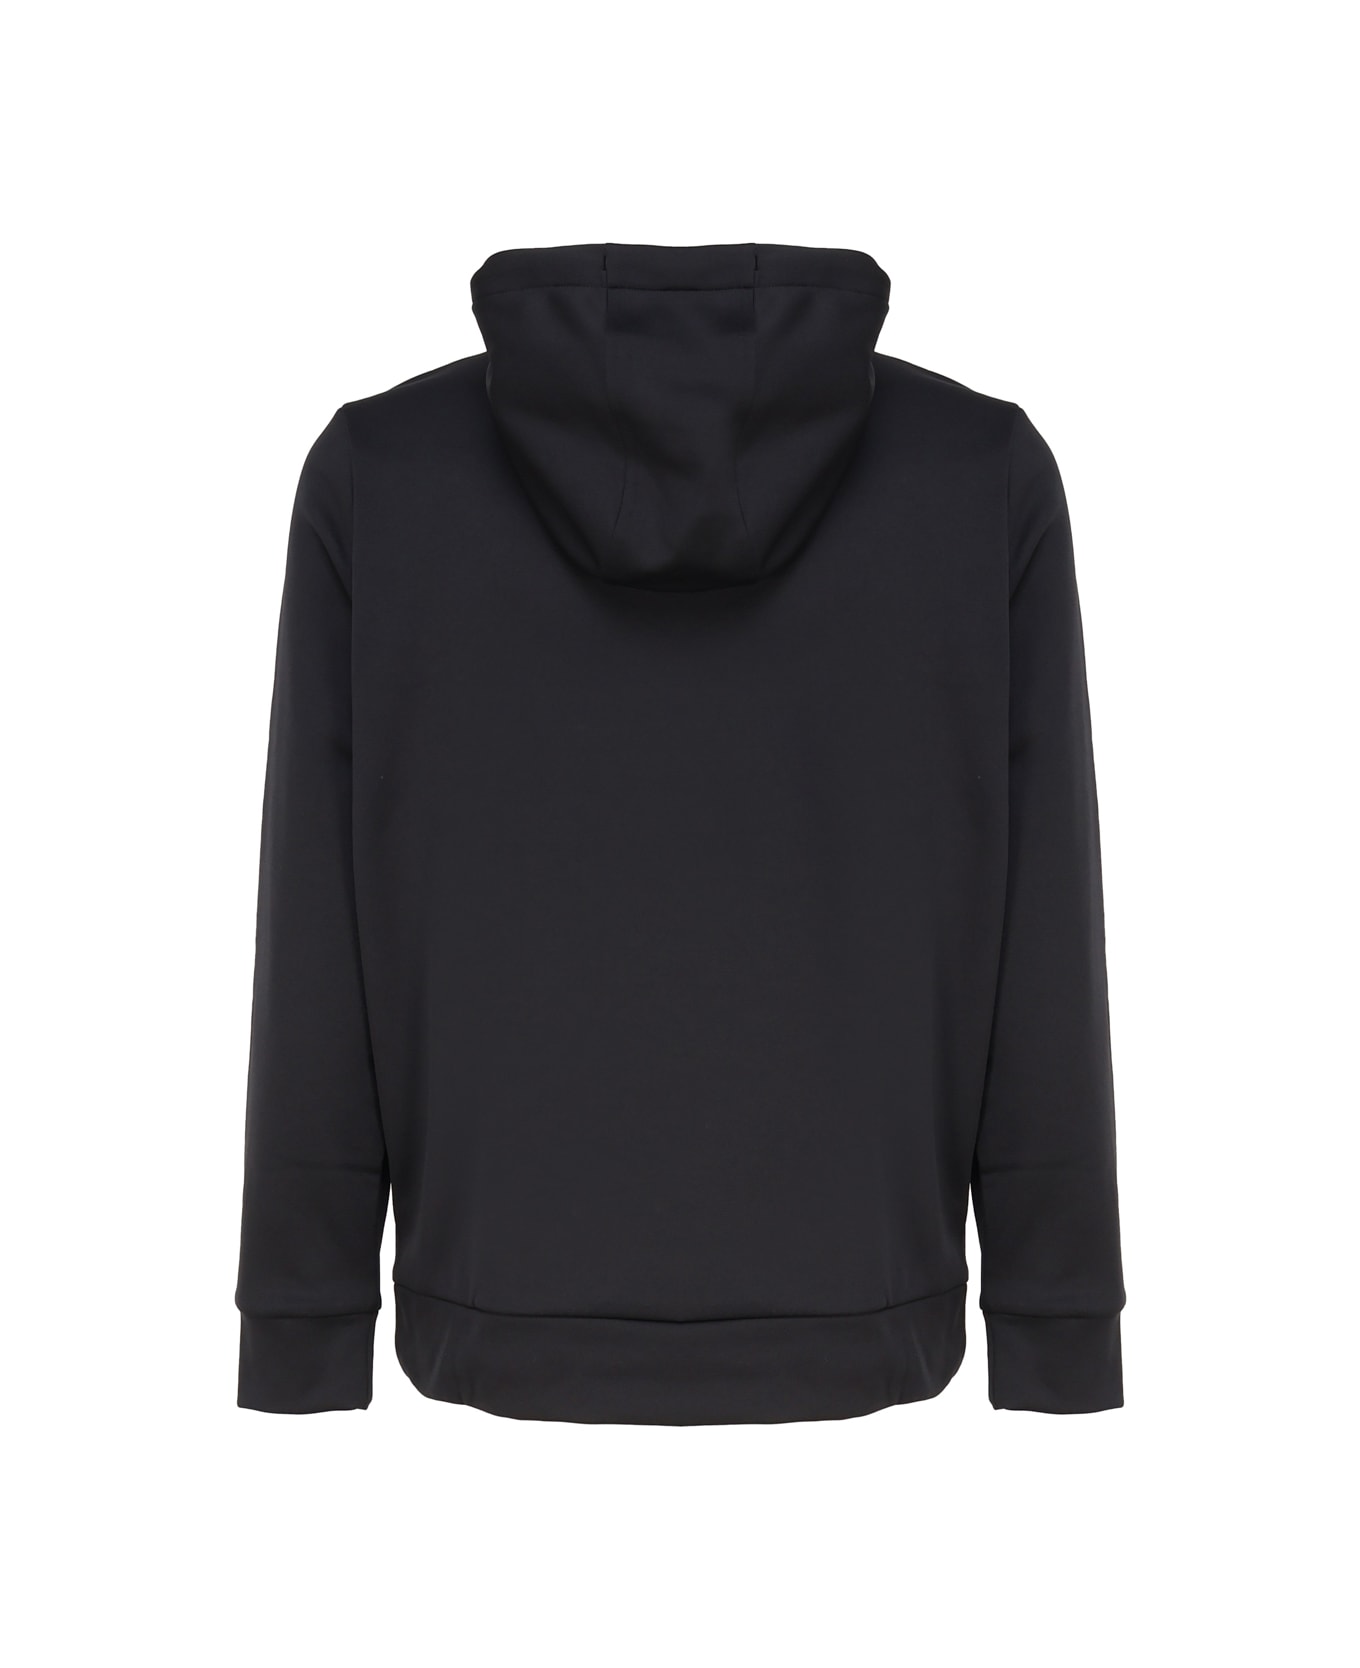 Under Armour Cotton Sweatshirt With Fleece Fabric - Black フリース